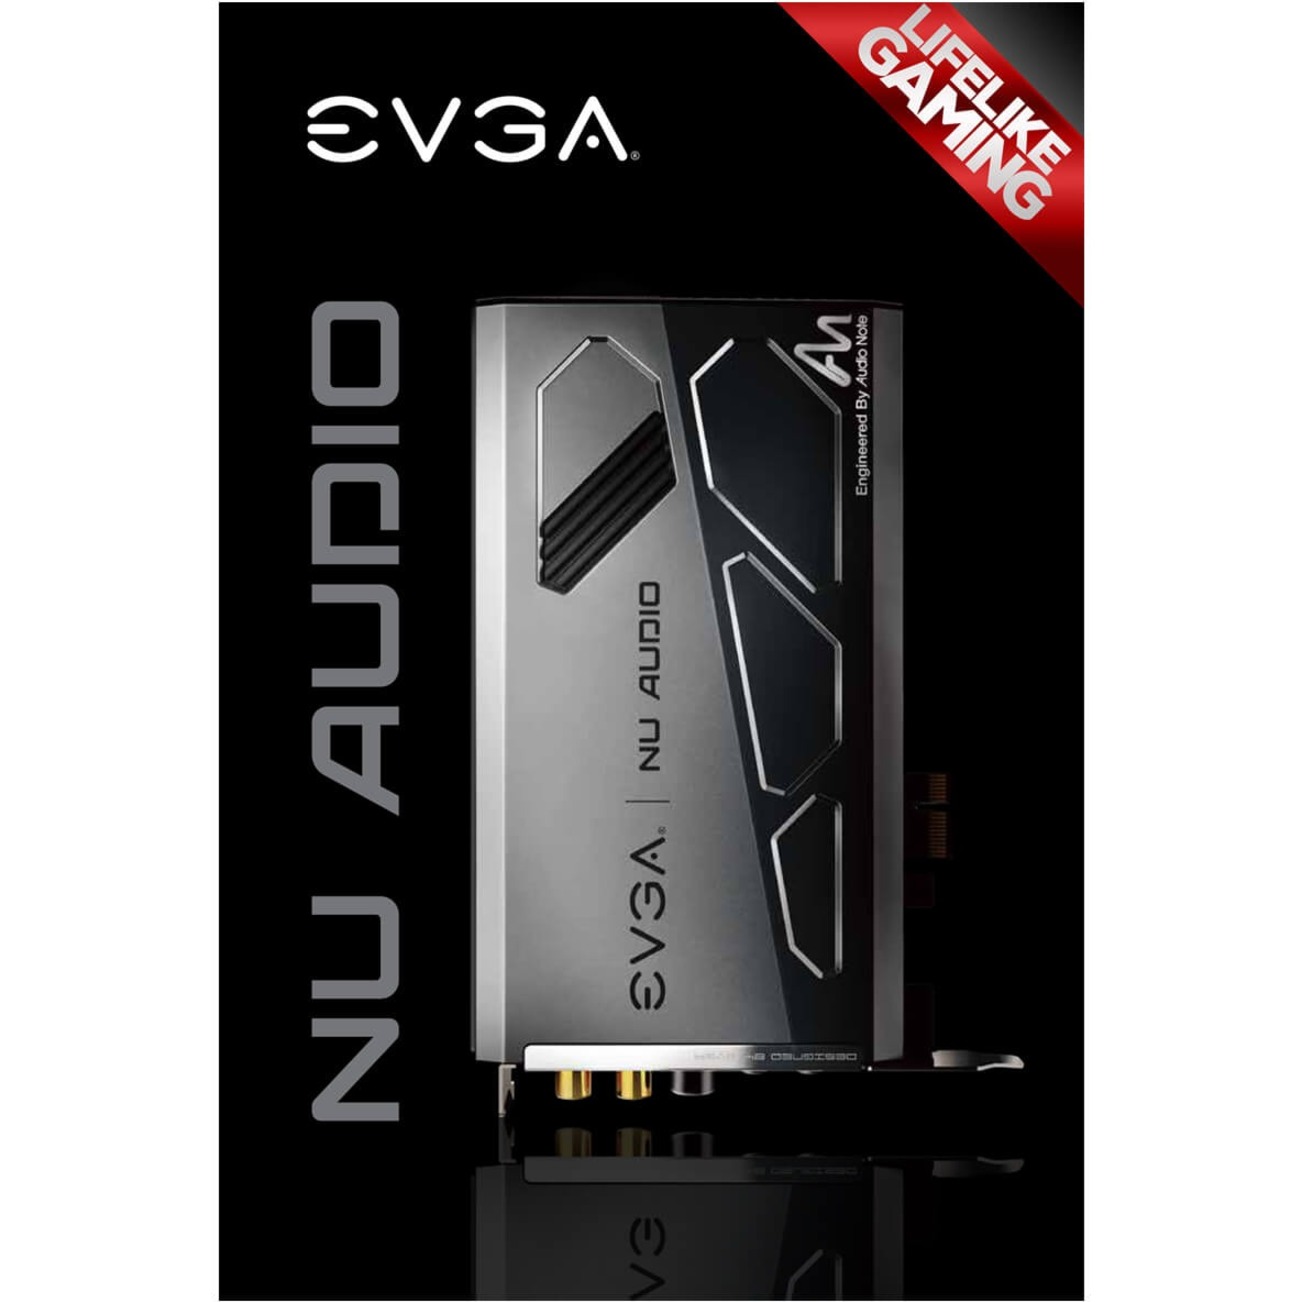 EVGA Nu Audio PCIe Sound Card - image 2 of 7